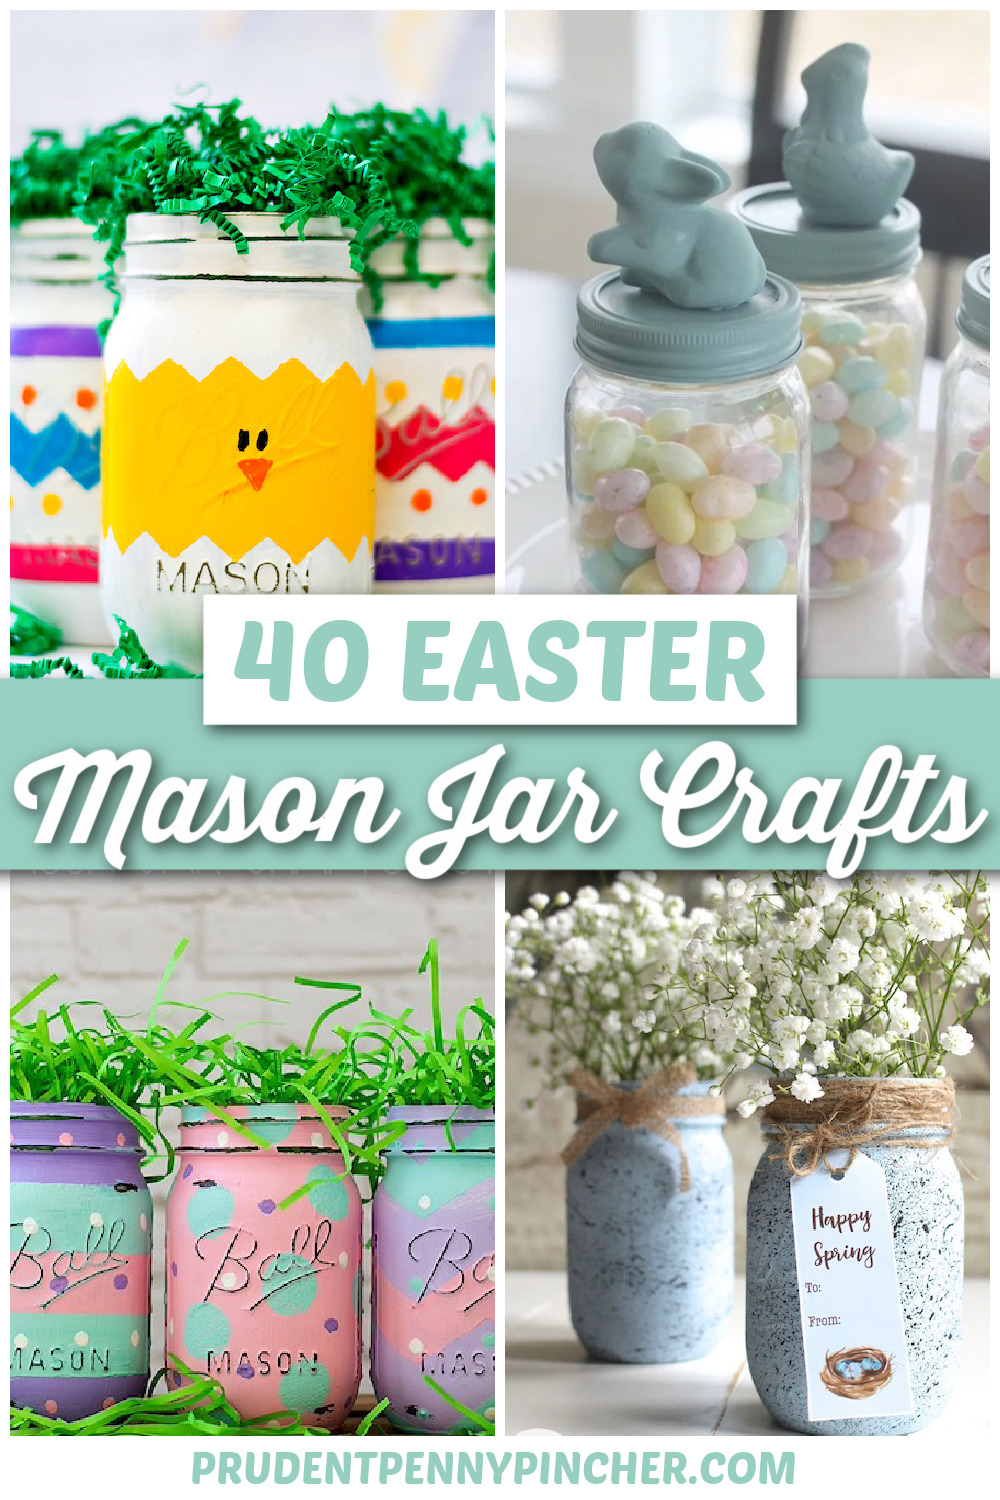 https://www.prudentpennypincher.com/wp-content/uploads/2021/02/Easter-Mason-jar-crafts.jpg